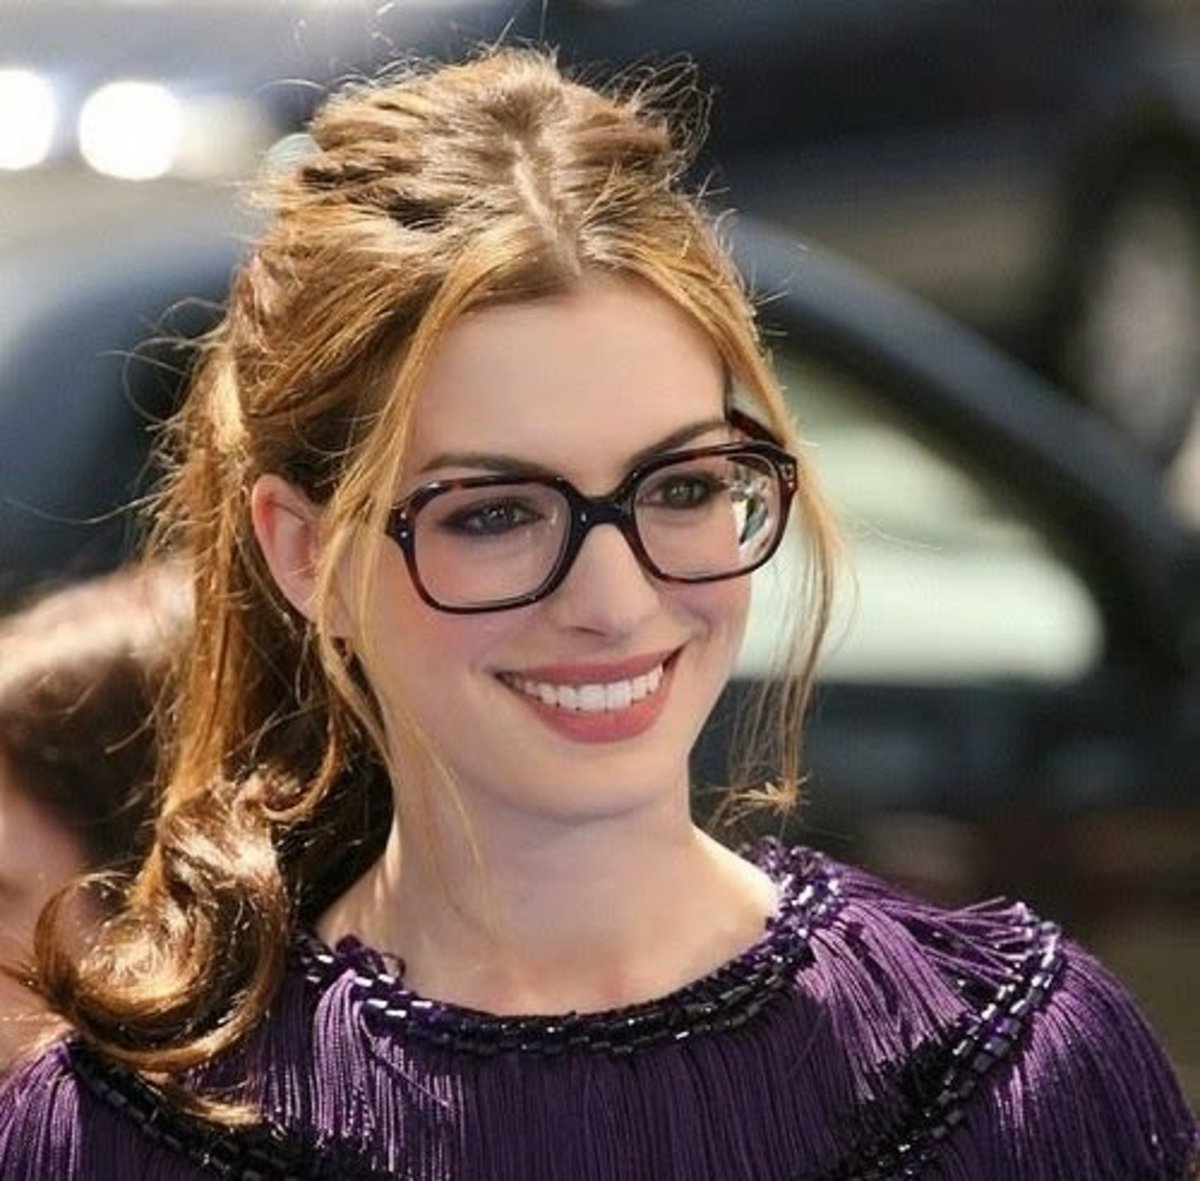 Anne Hathaway wearing bold dark framed glasses